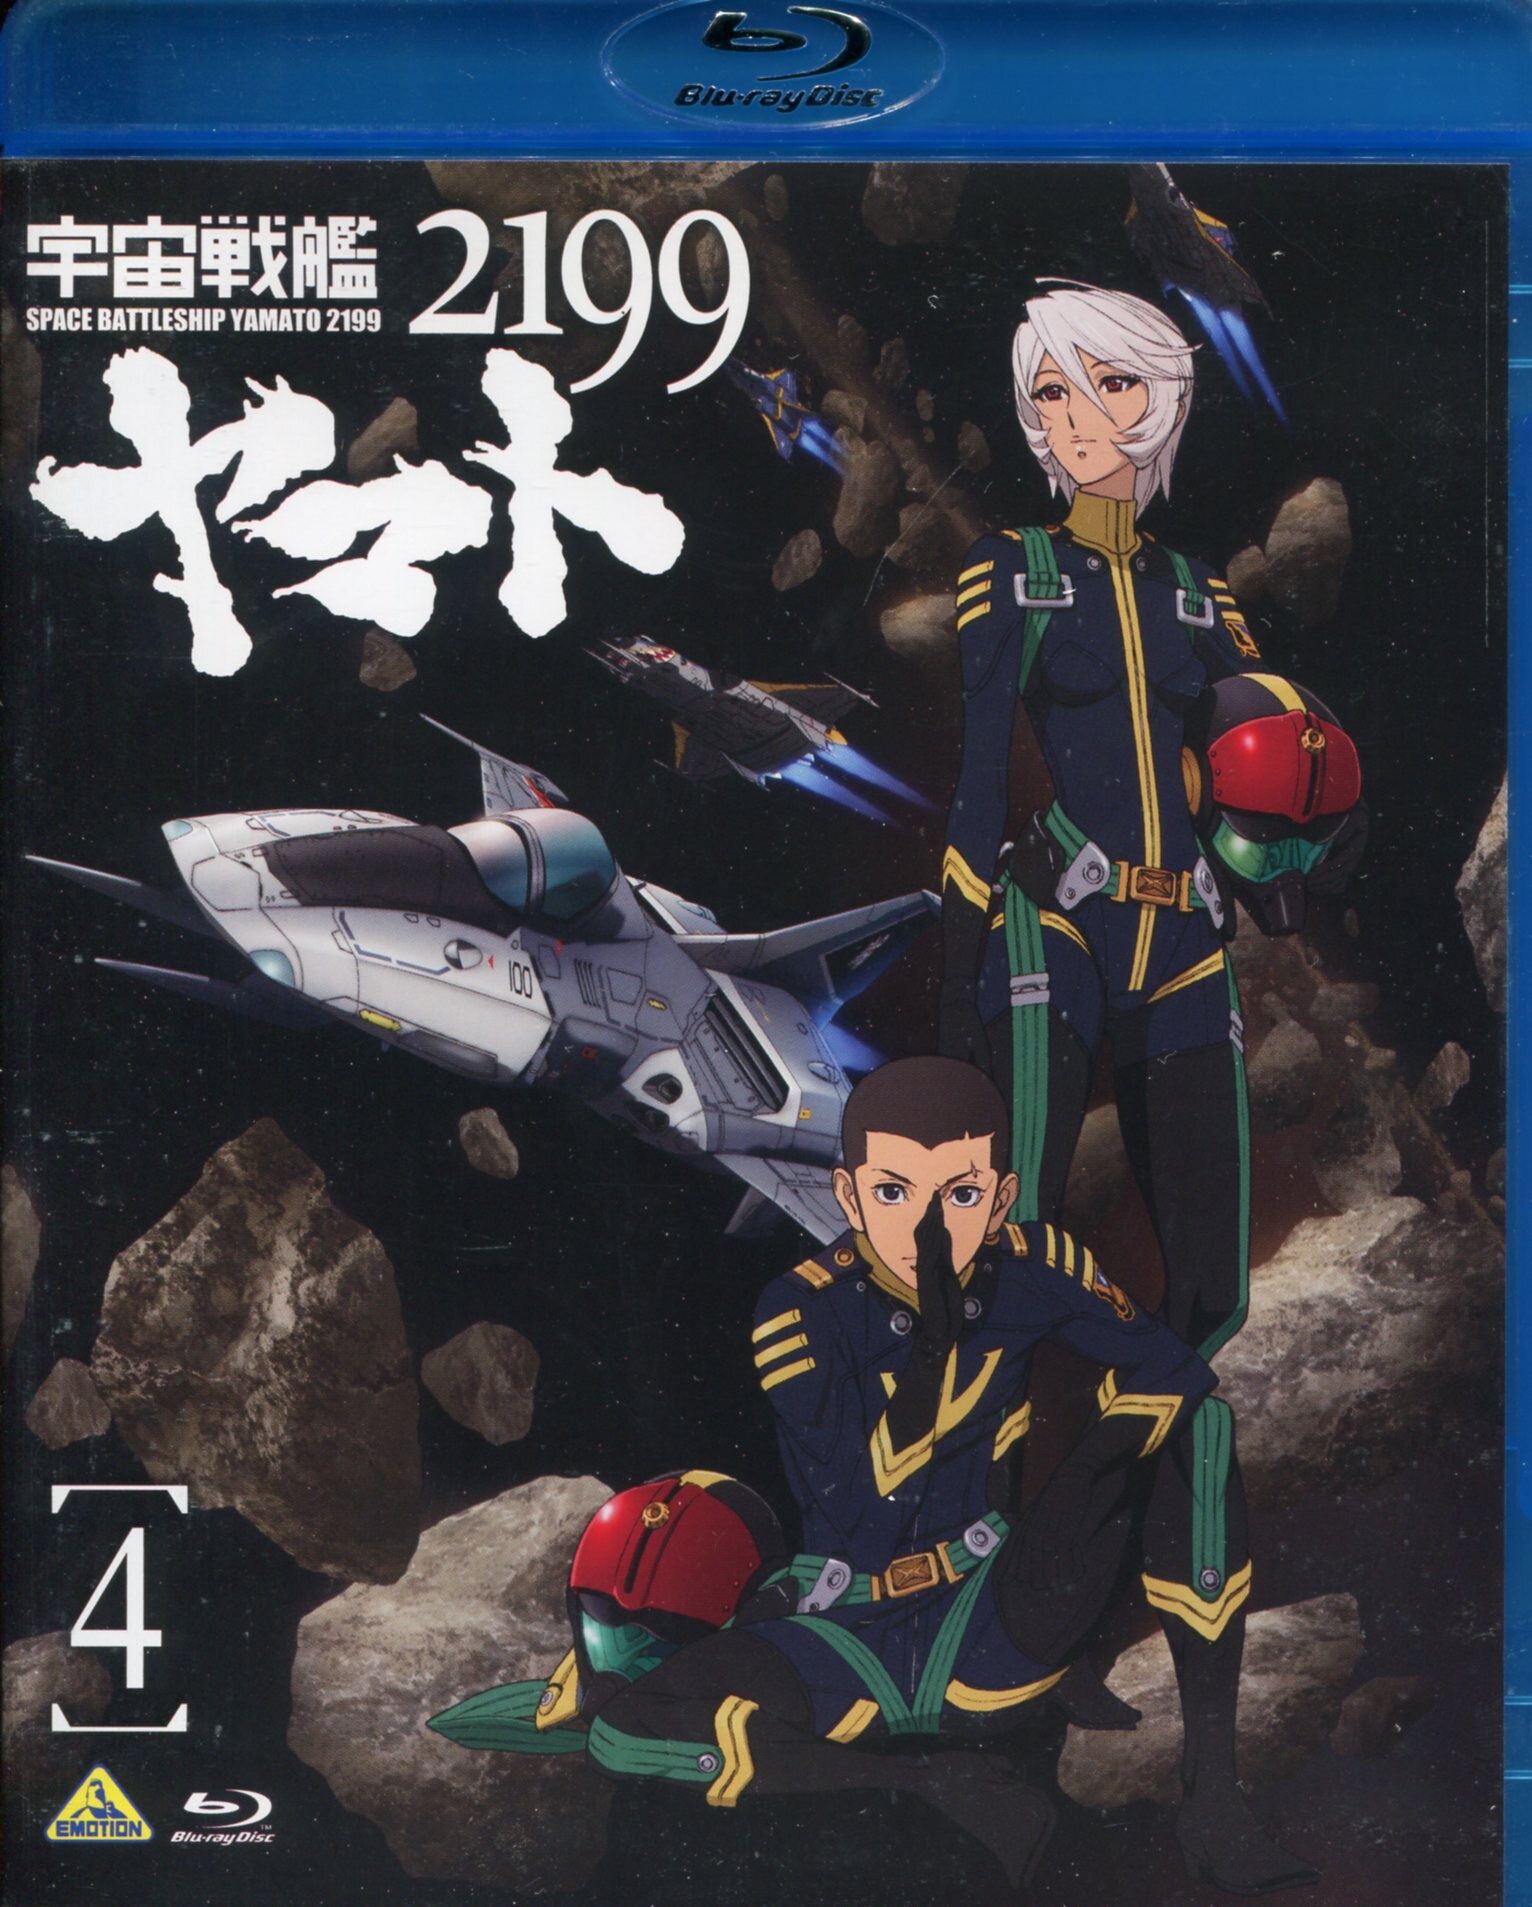 Space Battleship YamatoStar Blazers 2199 Anime Review w MercuryFalcon   FREE ARCADIA Podcast Ep 9  YouTube